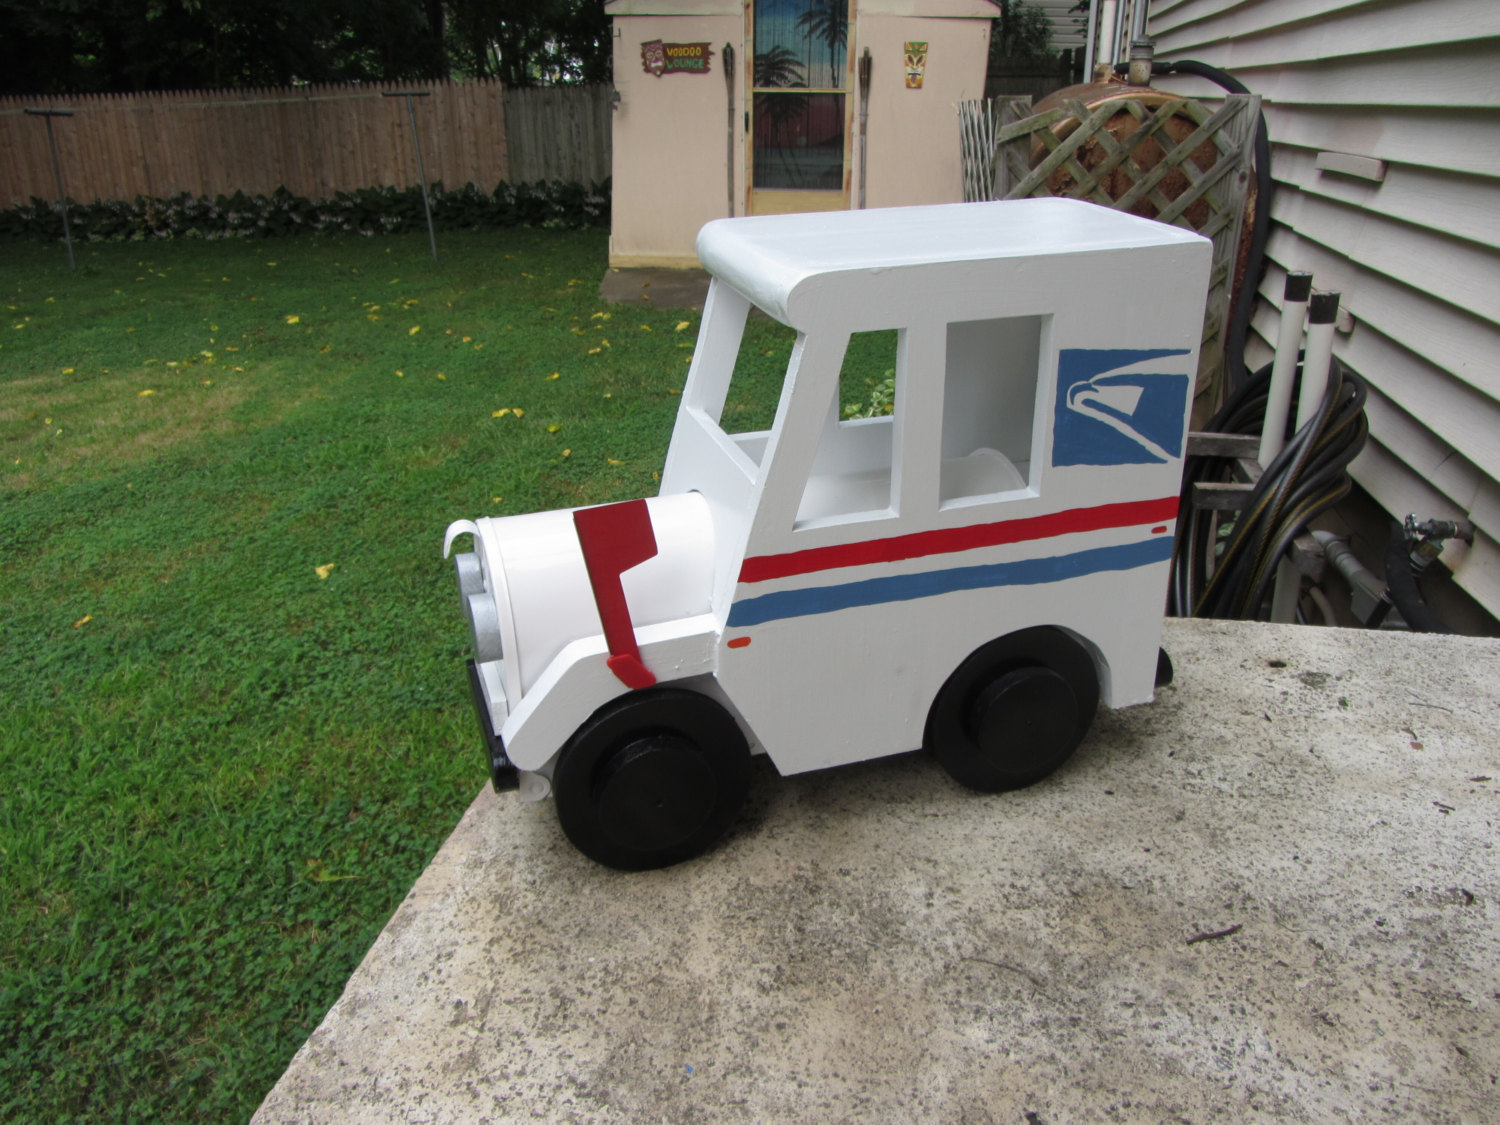 24 Creative & Funny Handmade Mailbox Designs